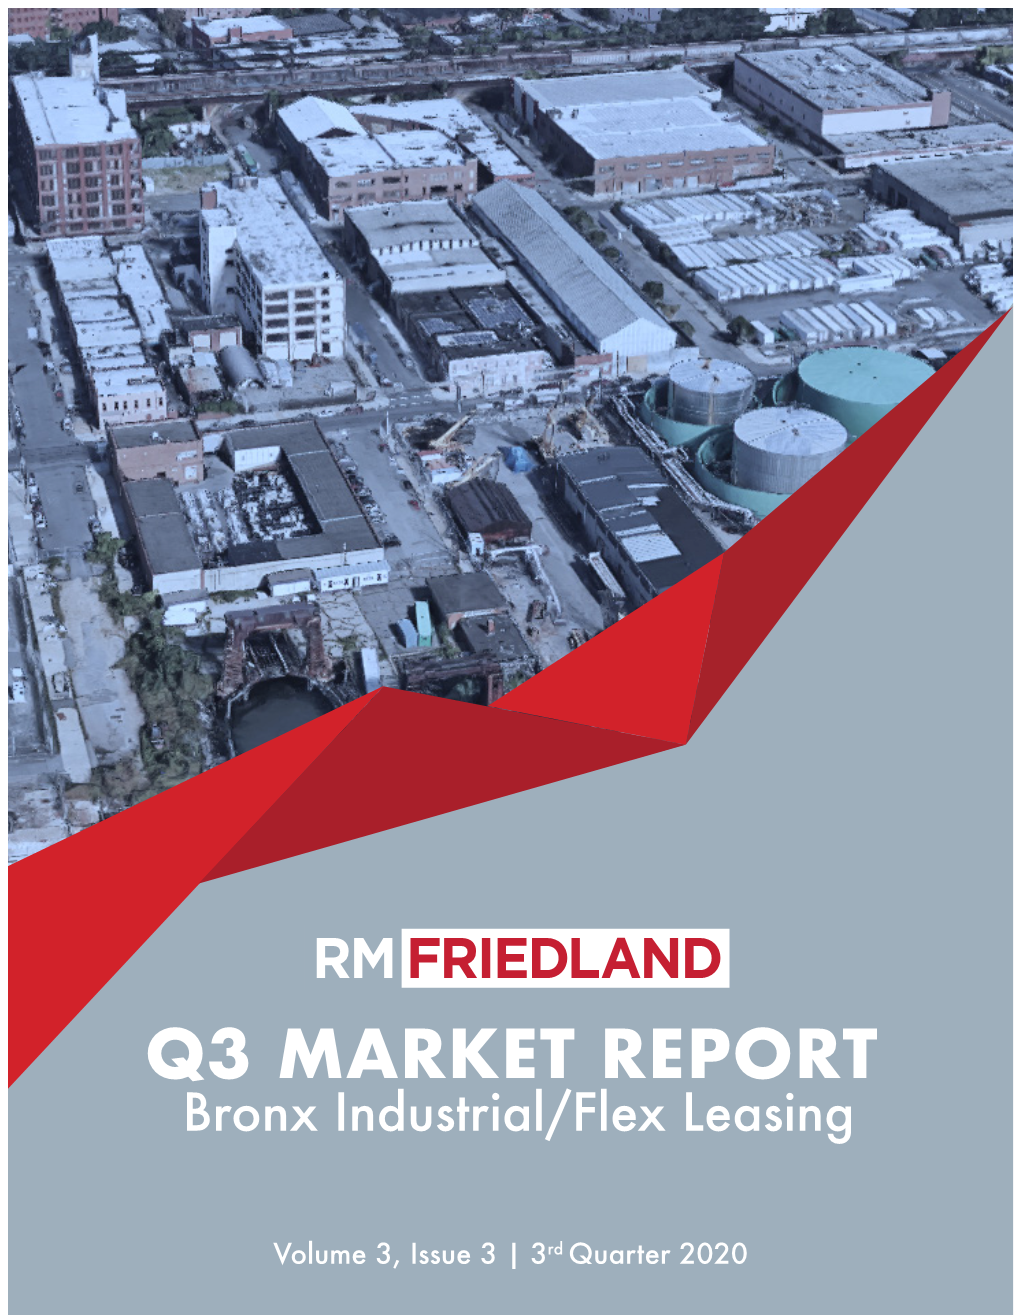 Q3 MARKET REPORT Bronx Industrial/Flex Leasing